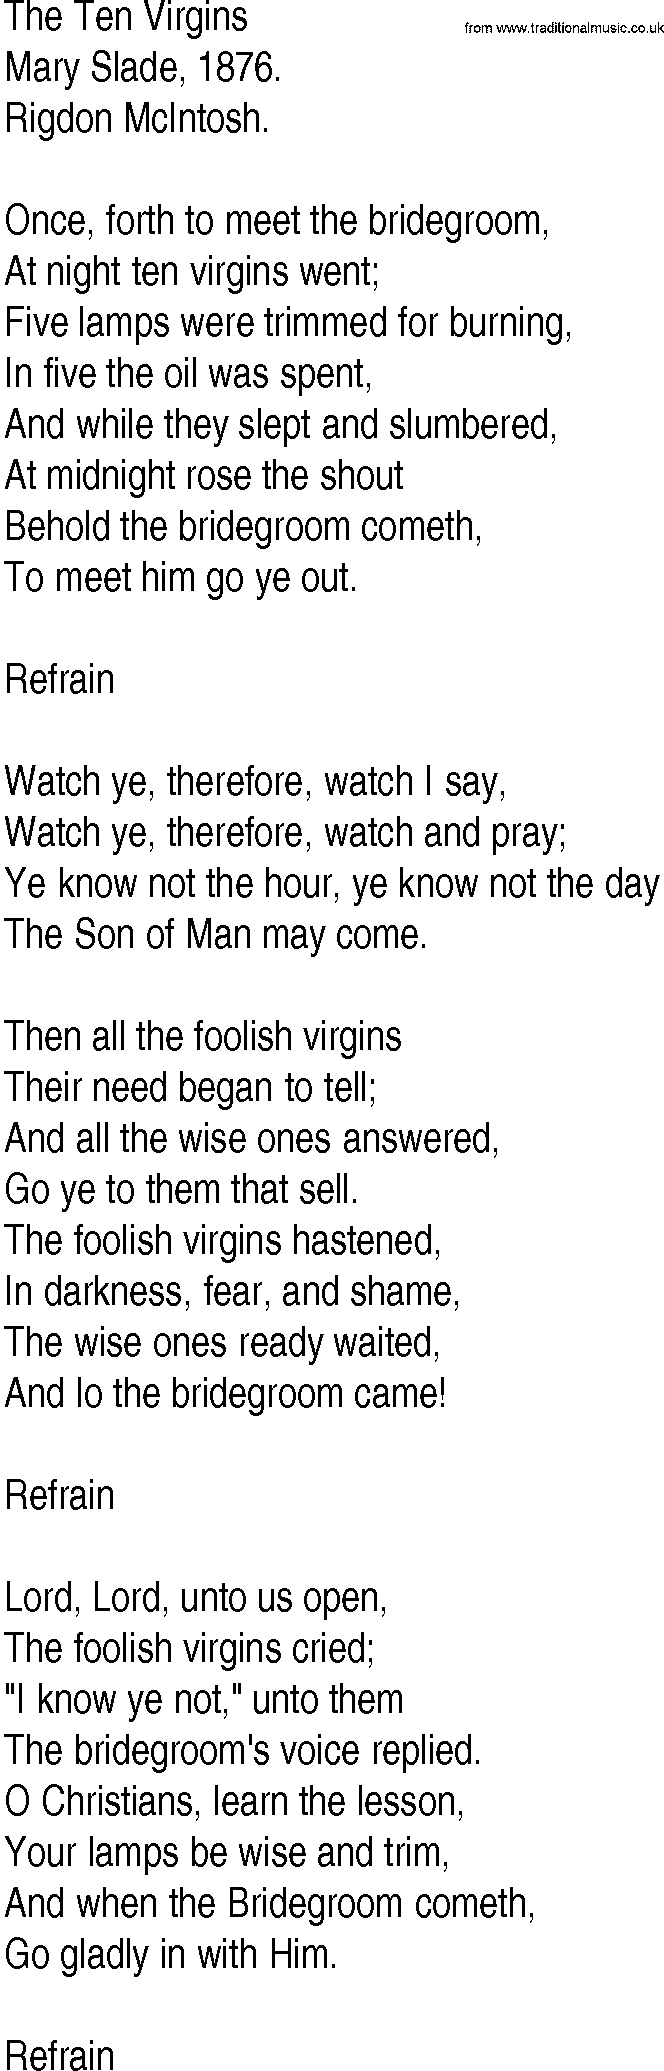 Hymn and Gospel Song: The Ten Virgins by Mary Slade lyrics